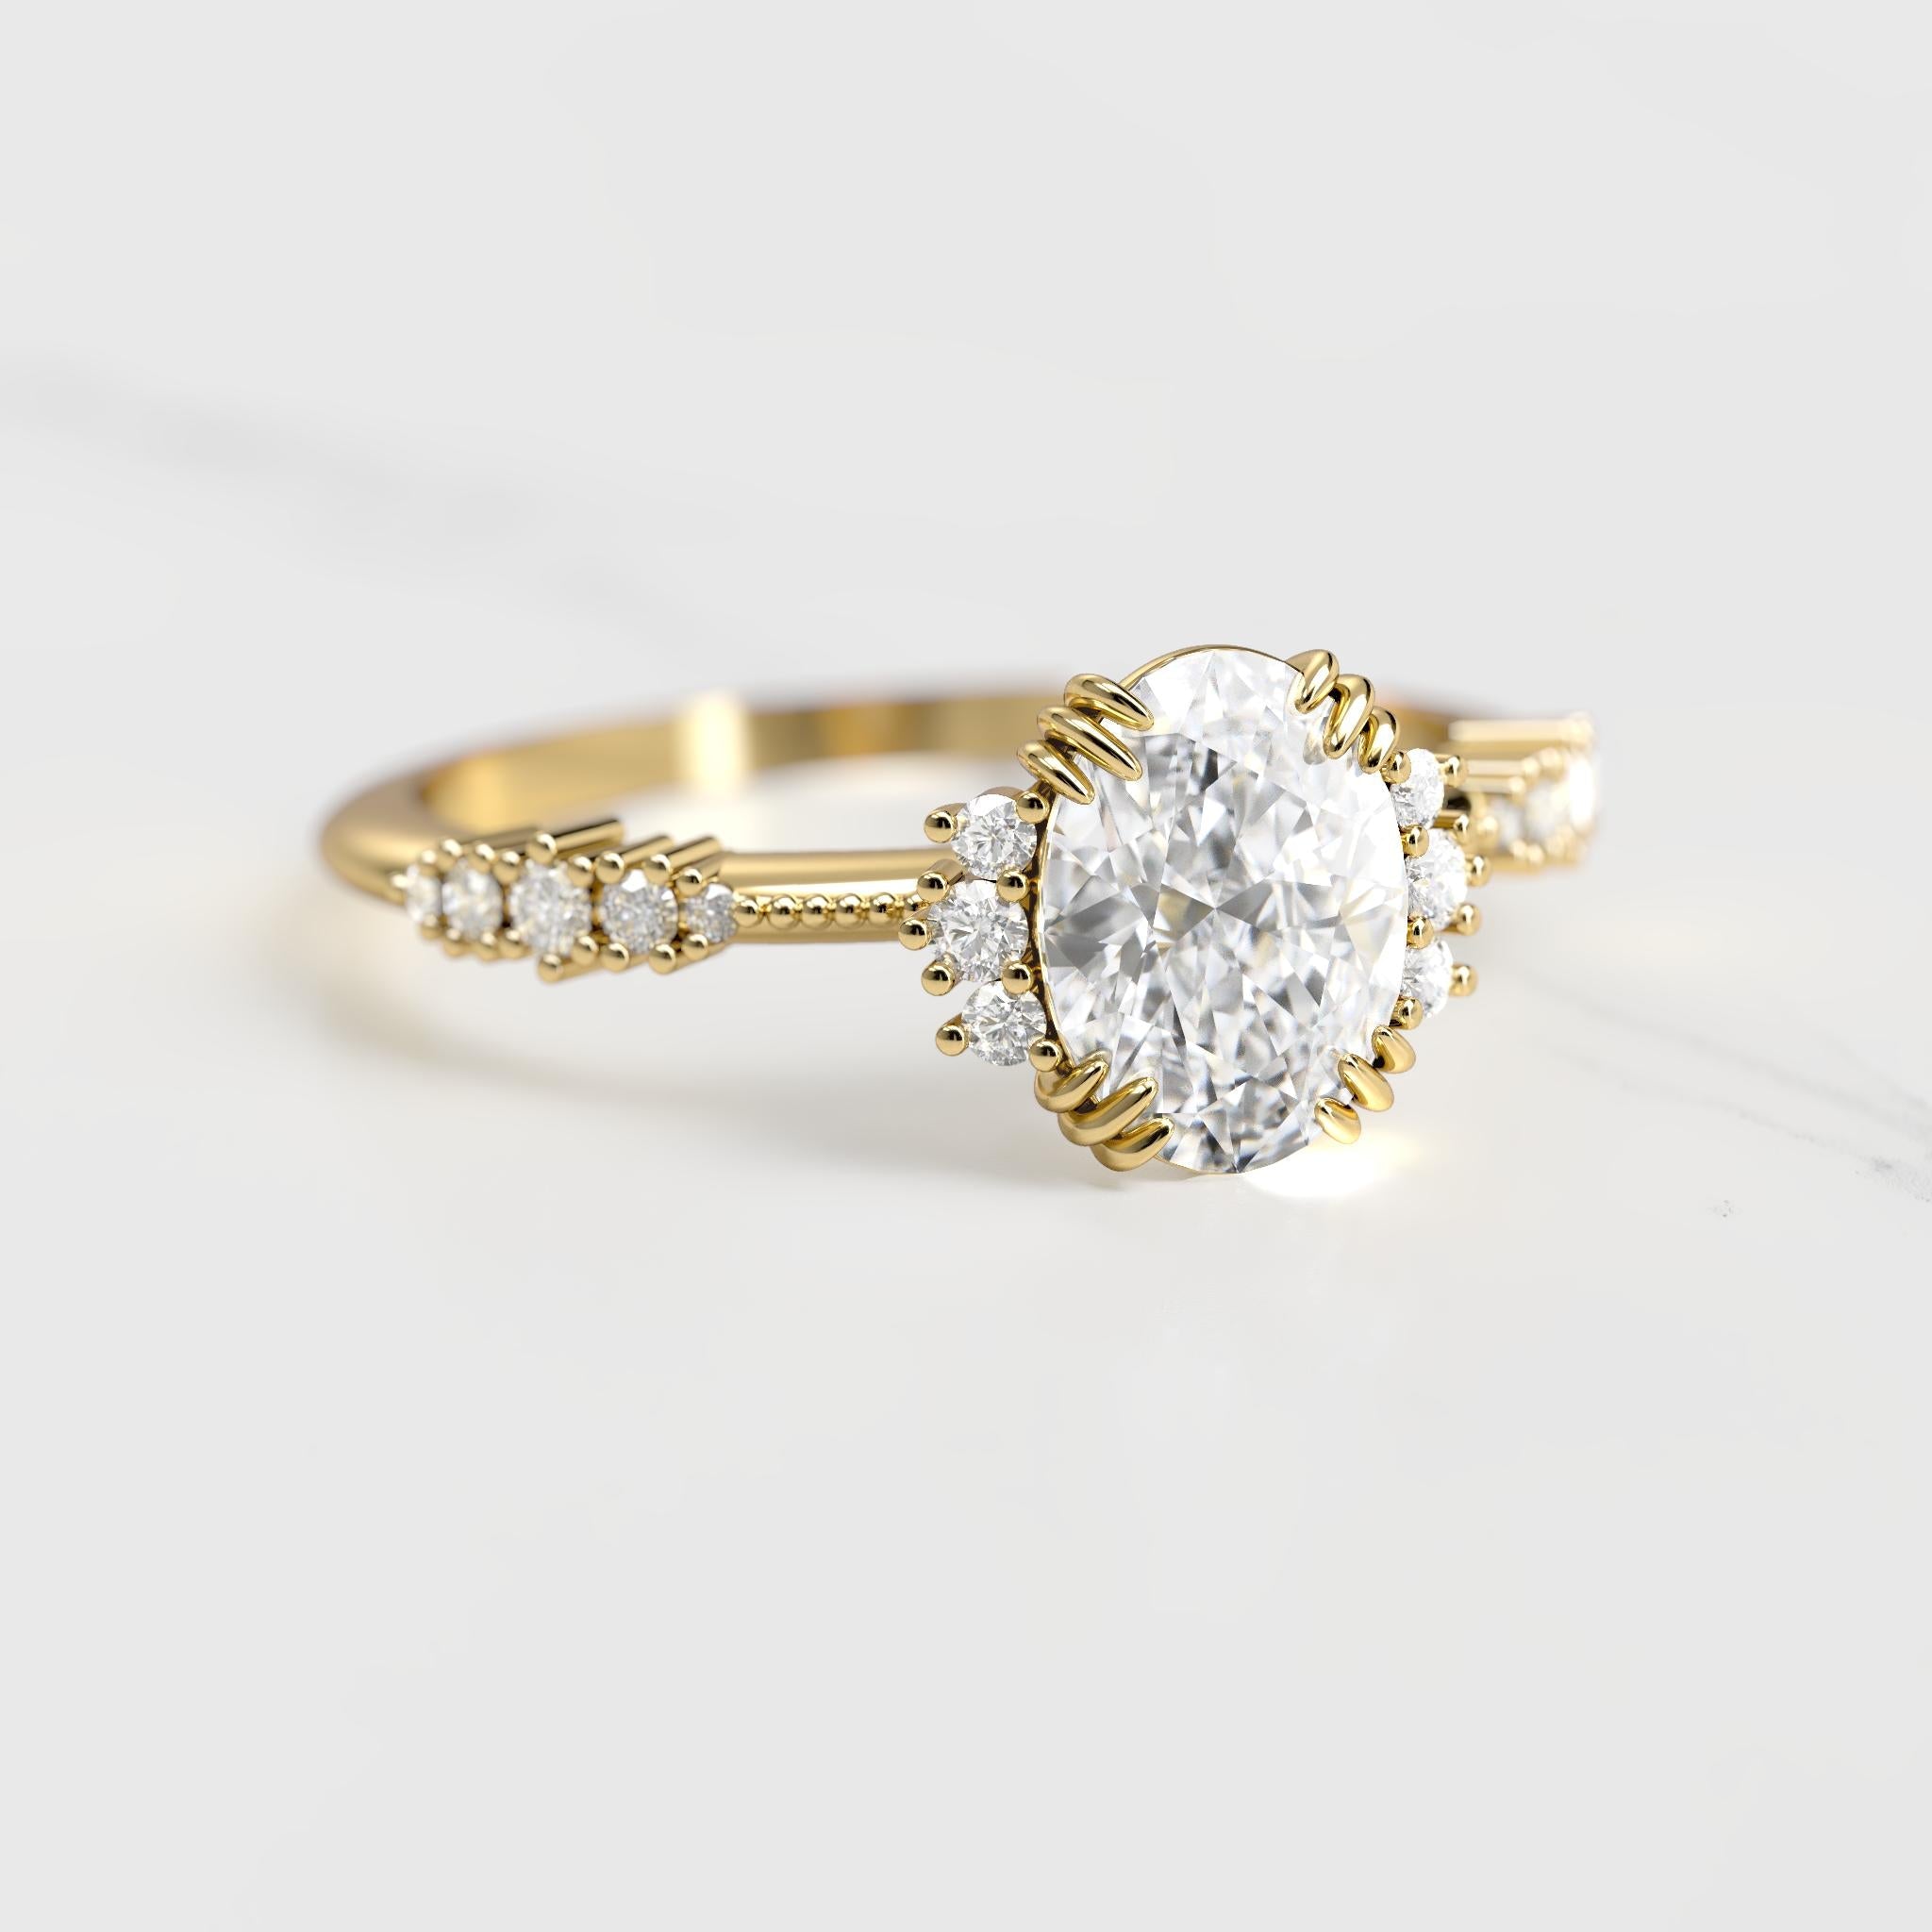 OVAL CLUSTER DIAMOND RING - 18k white gold / 1.25ct / lab diamond